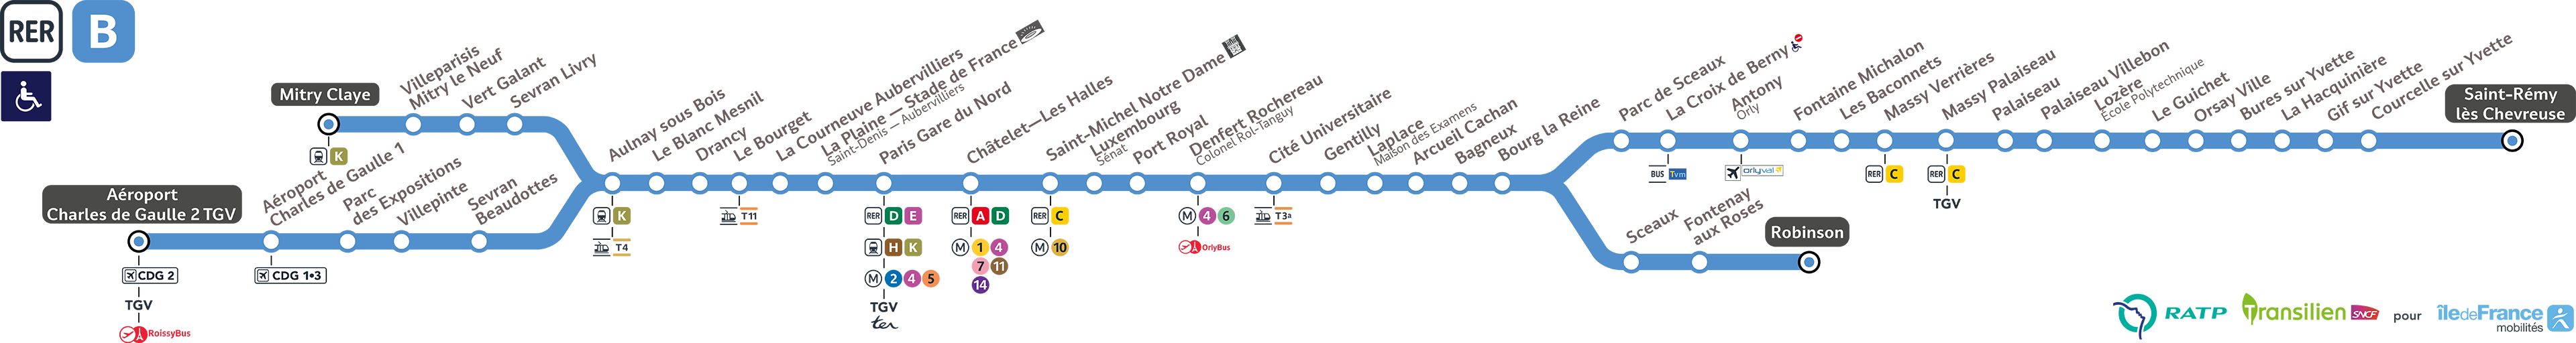 Plan du train RER B